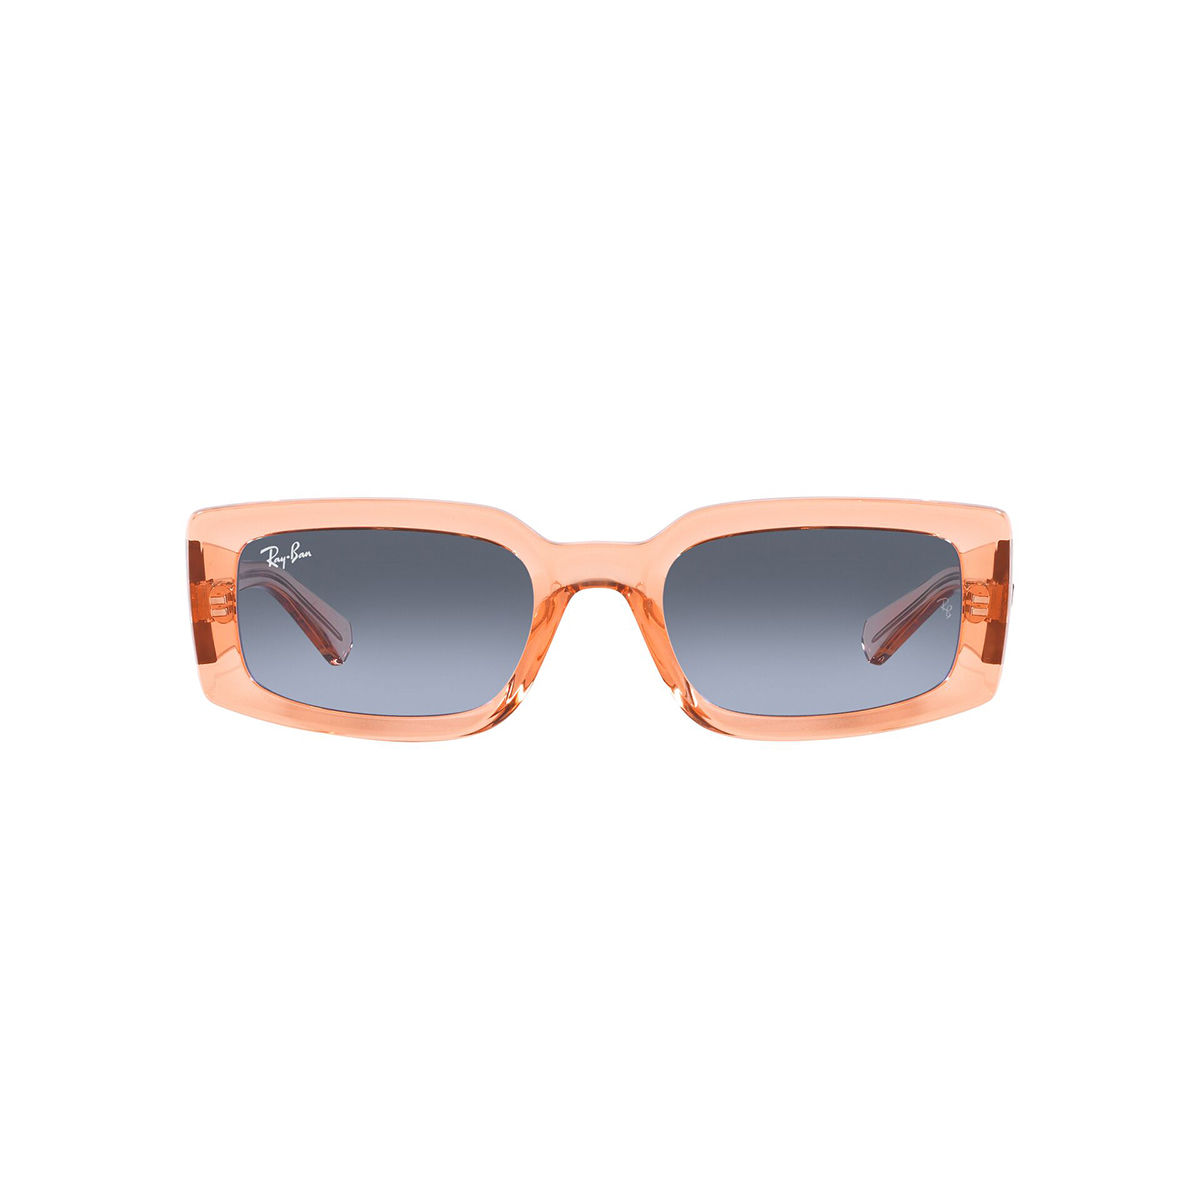 Ray-Ban New Wayfarer Sunglasses - Top Blue/Orange // Crystal Gradient Light  Blue - Accessories from Fat Buddha Store UK